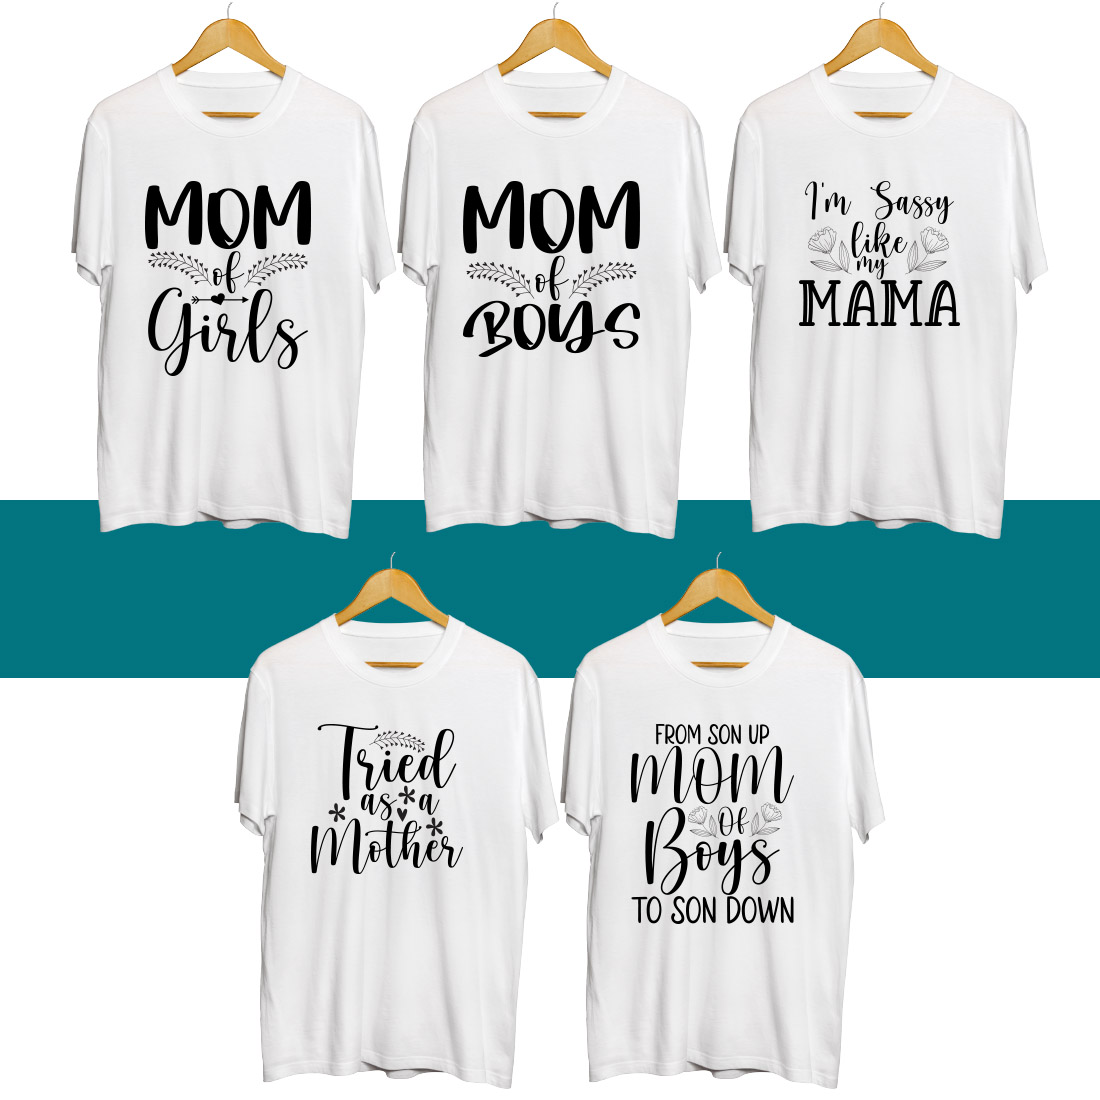 Mother's Day SVG T Shirt Designs Bundle cover image.